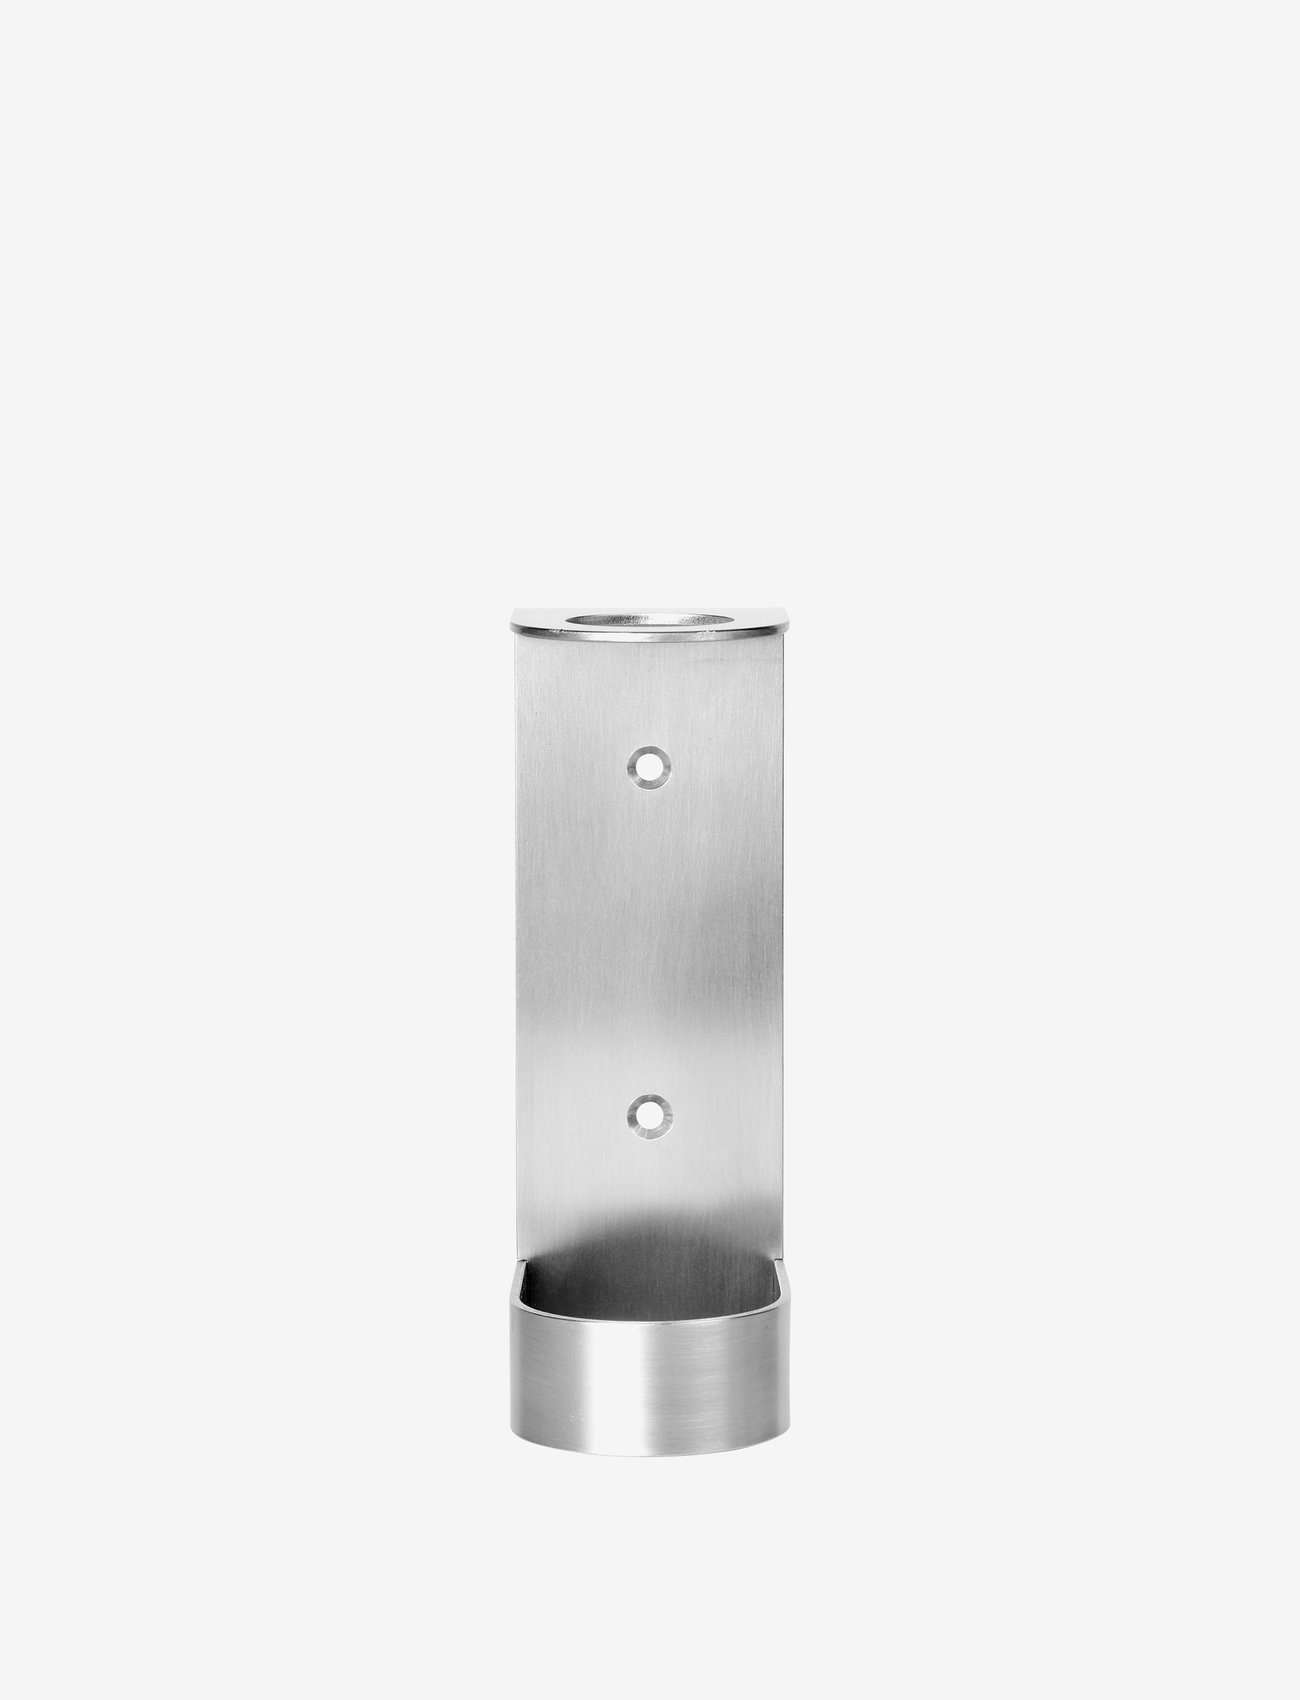 Kristina Dam Studio - Dowel Bottle Display - Hand Lotion - koukut - stainless steel - 0